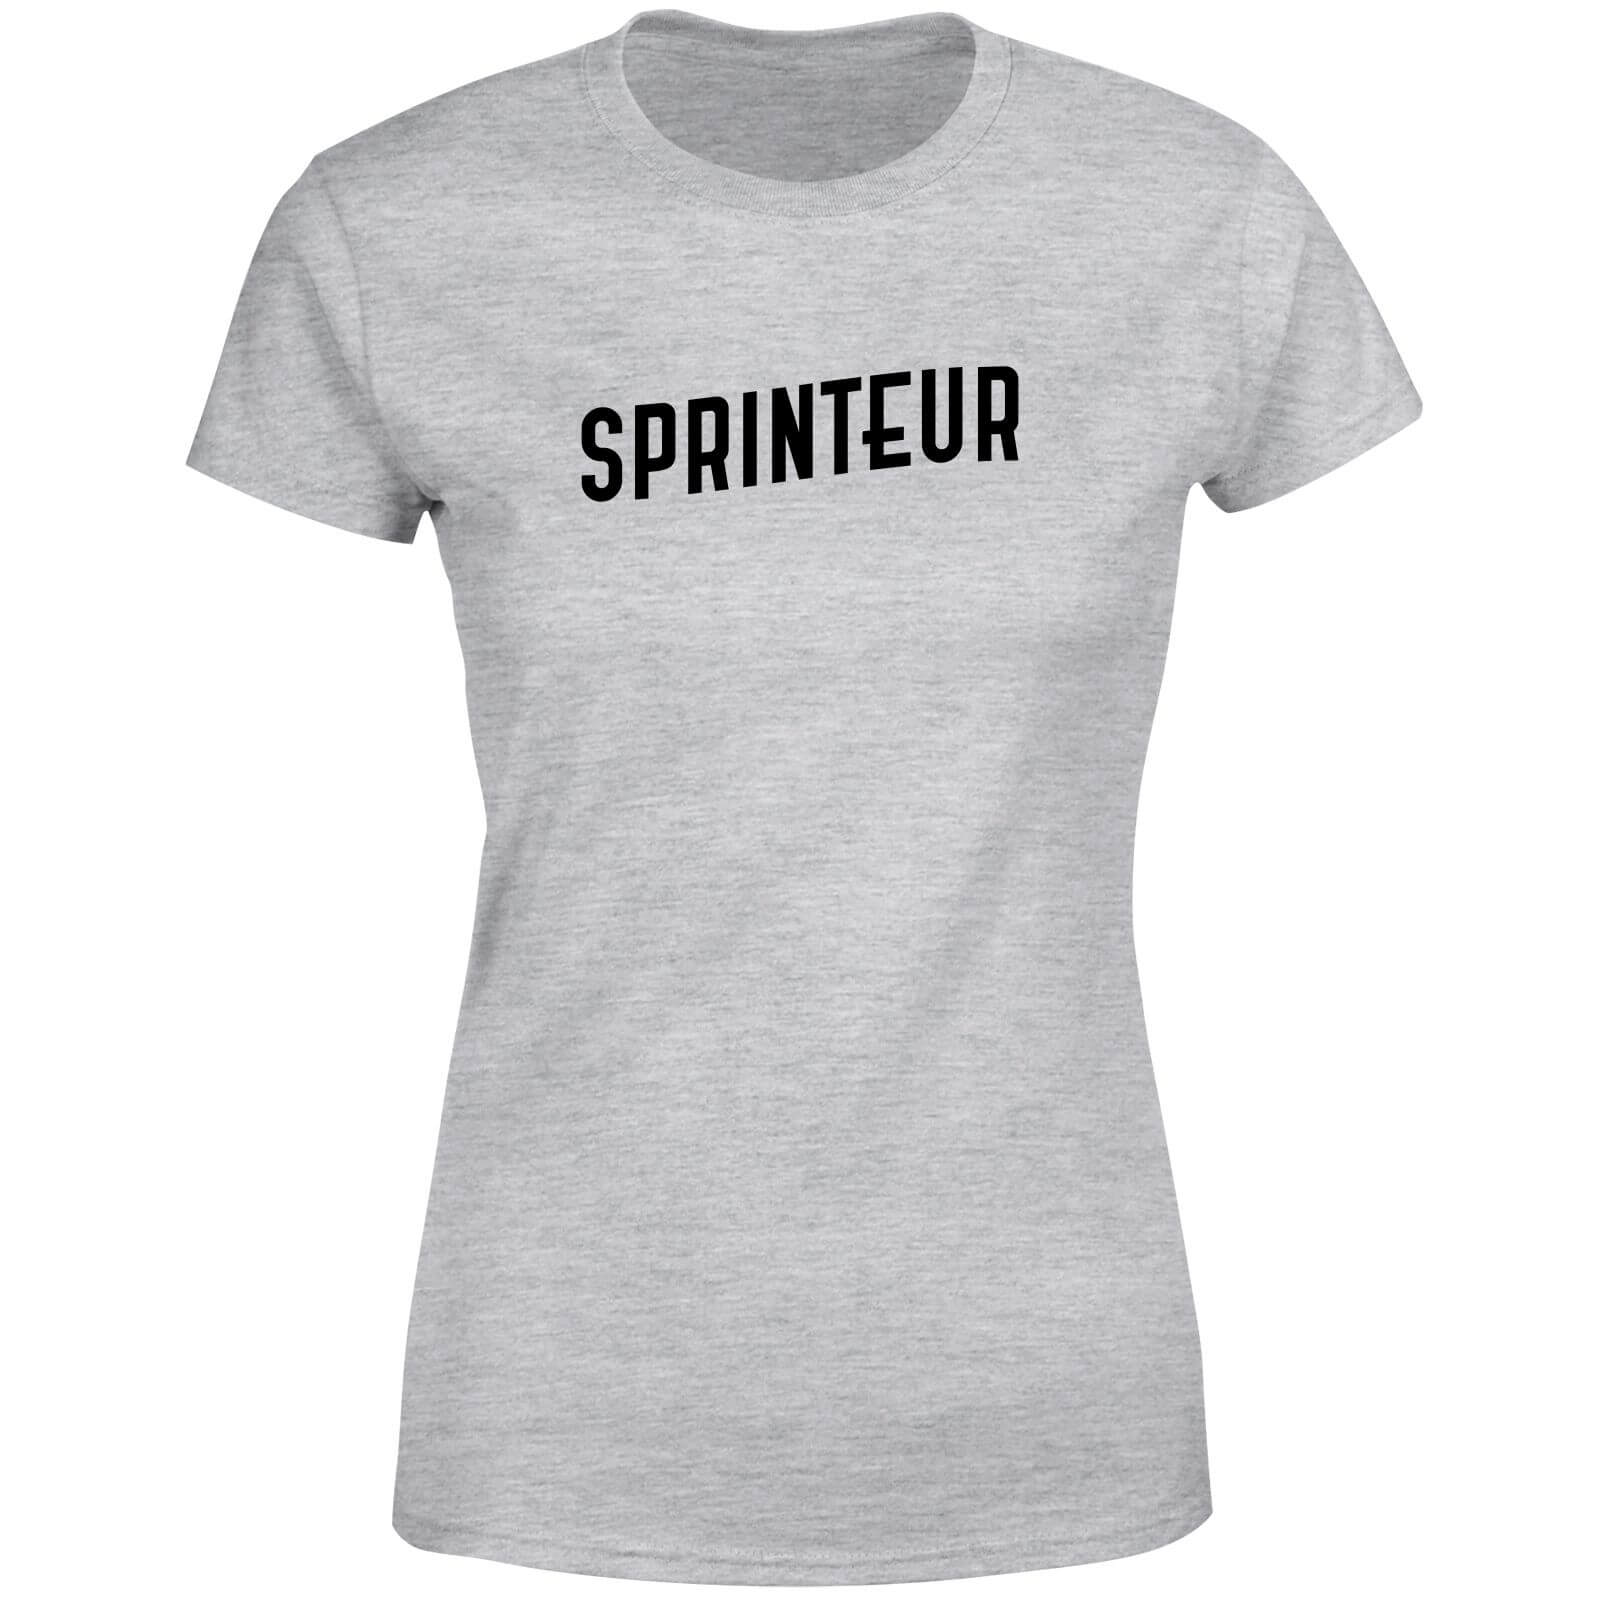 Sprinteur Women's T-Shirt - Grey - S - Grey